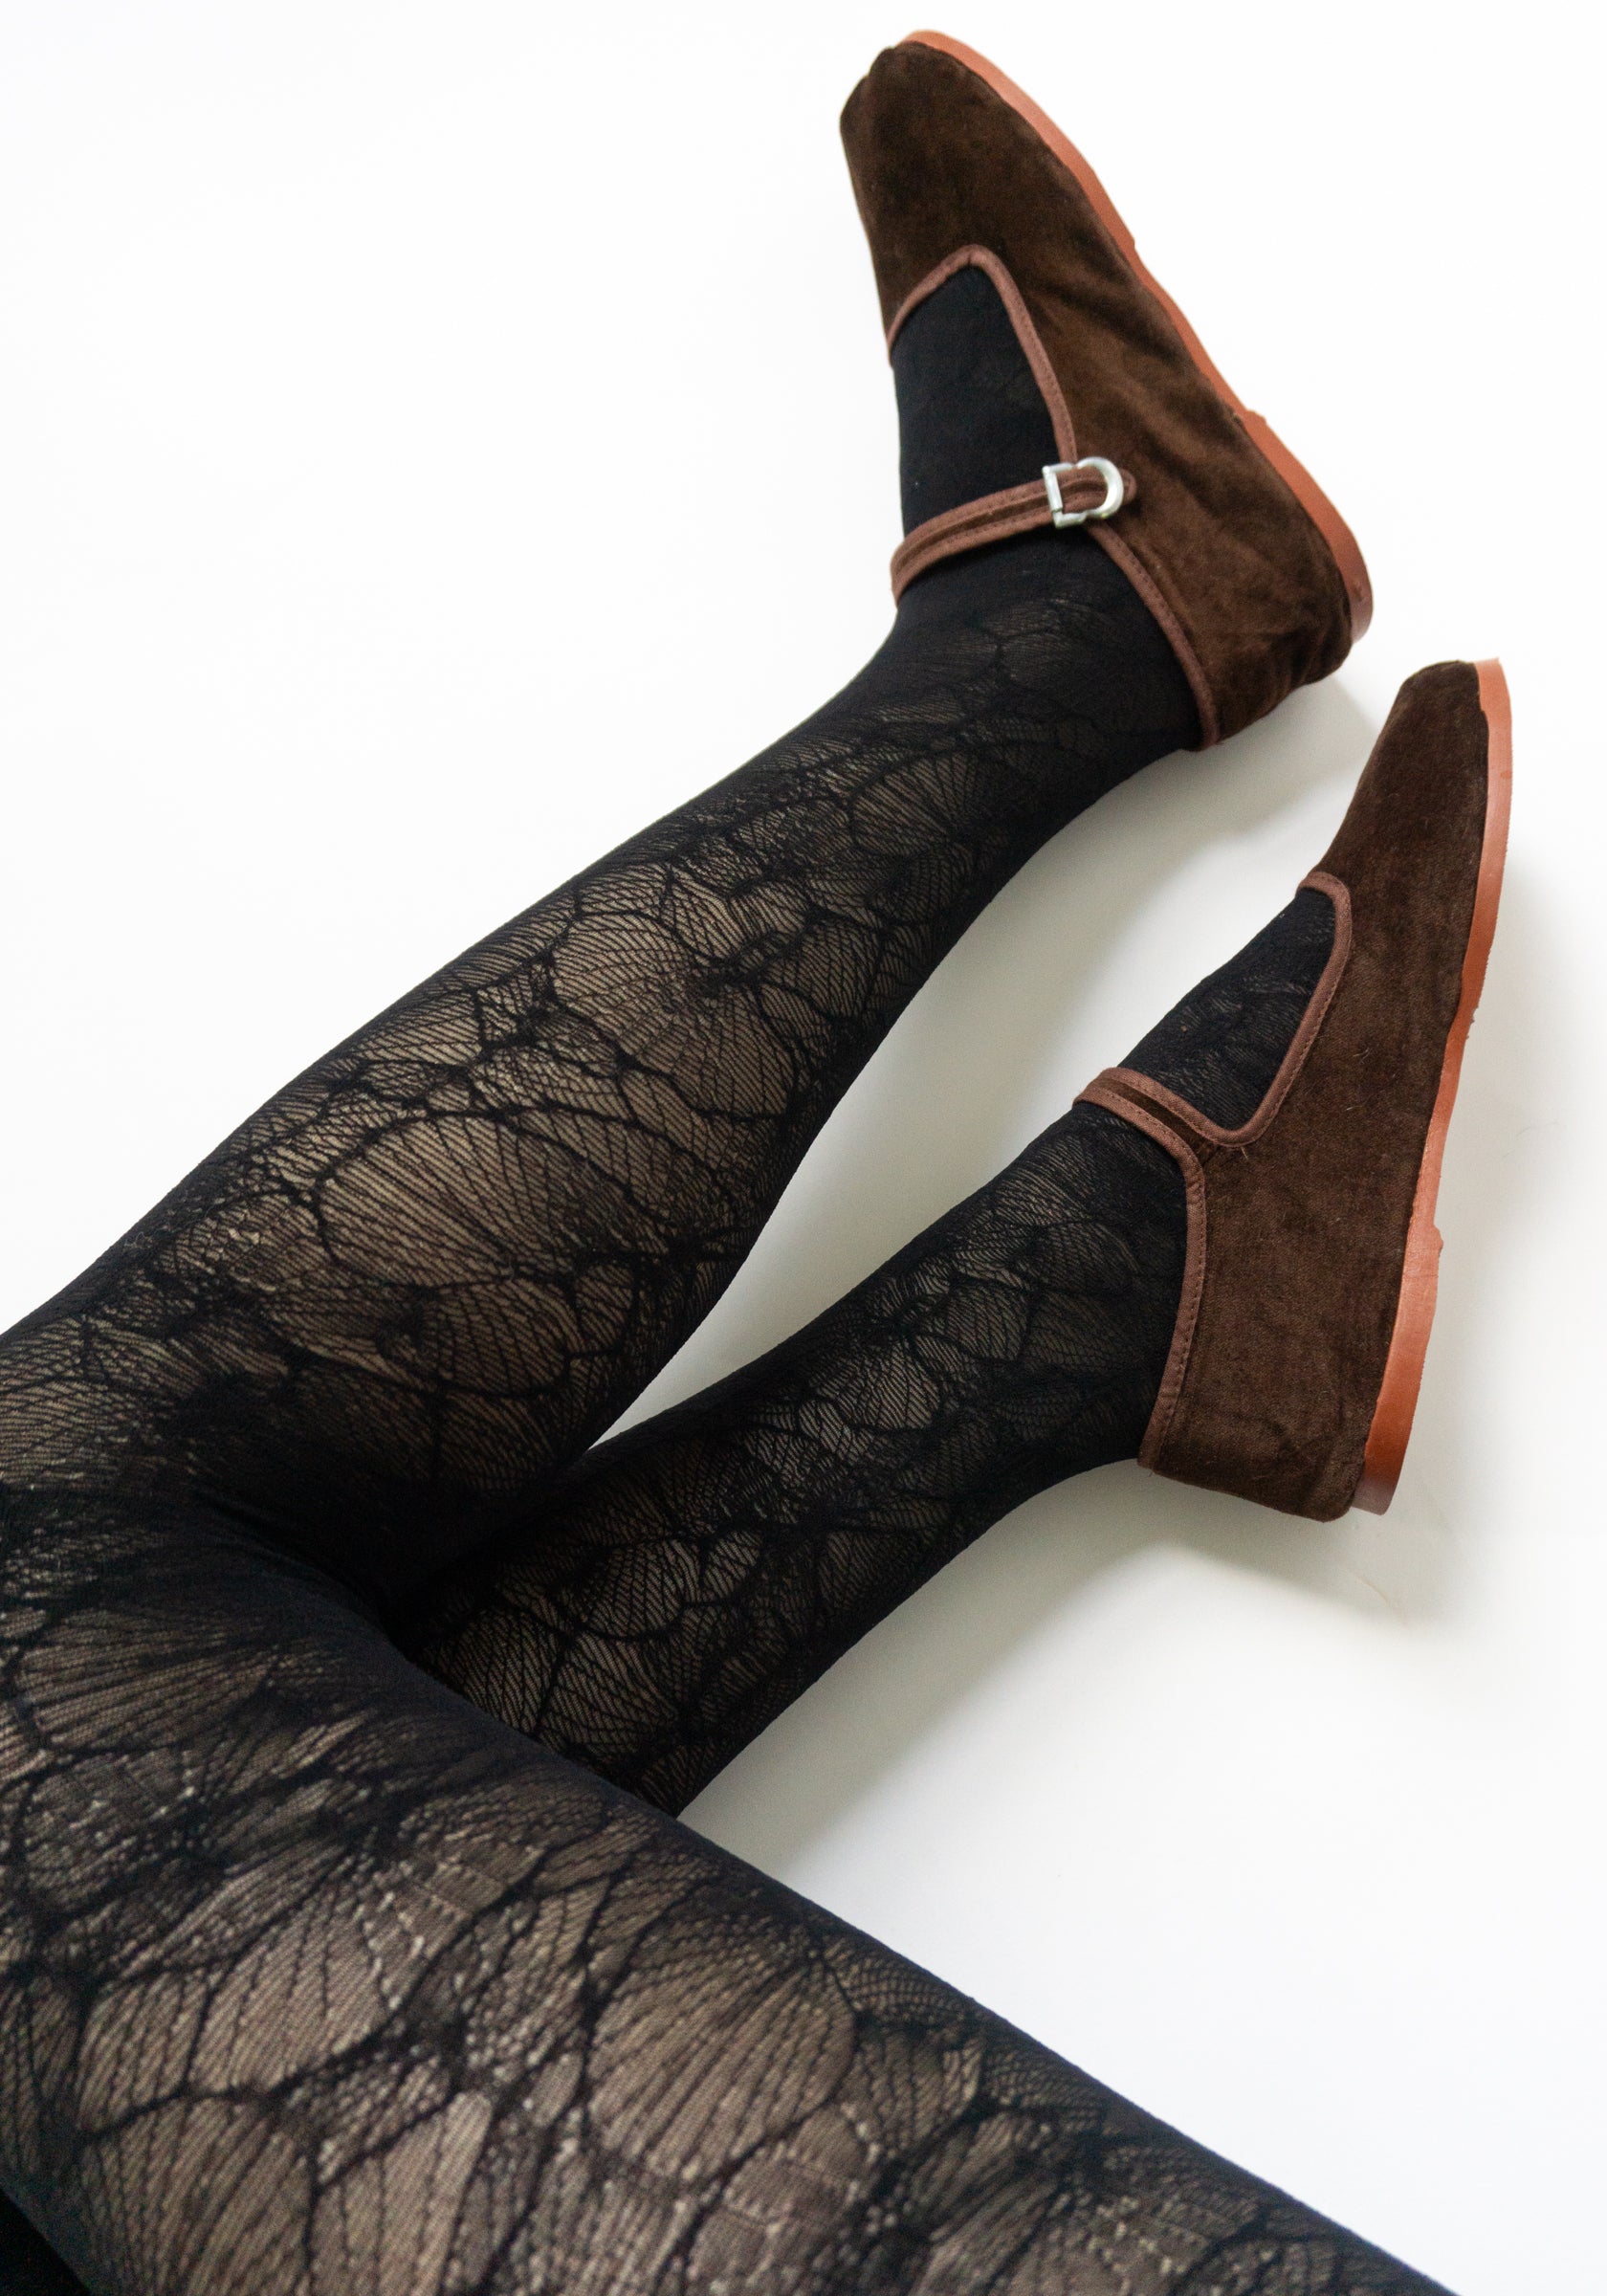 Swedish Stockings Alba Ginkgo Tights in Black